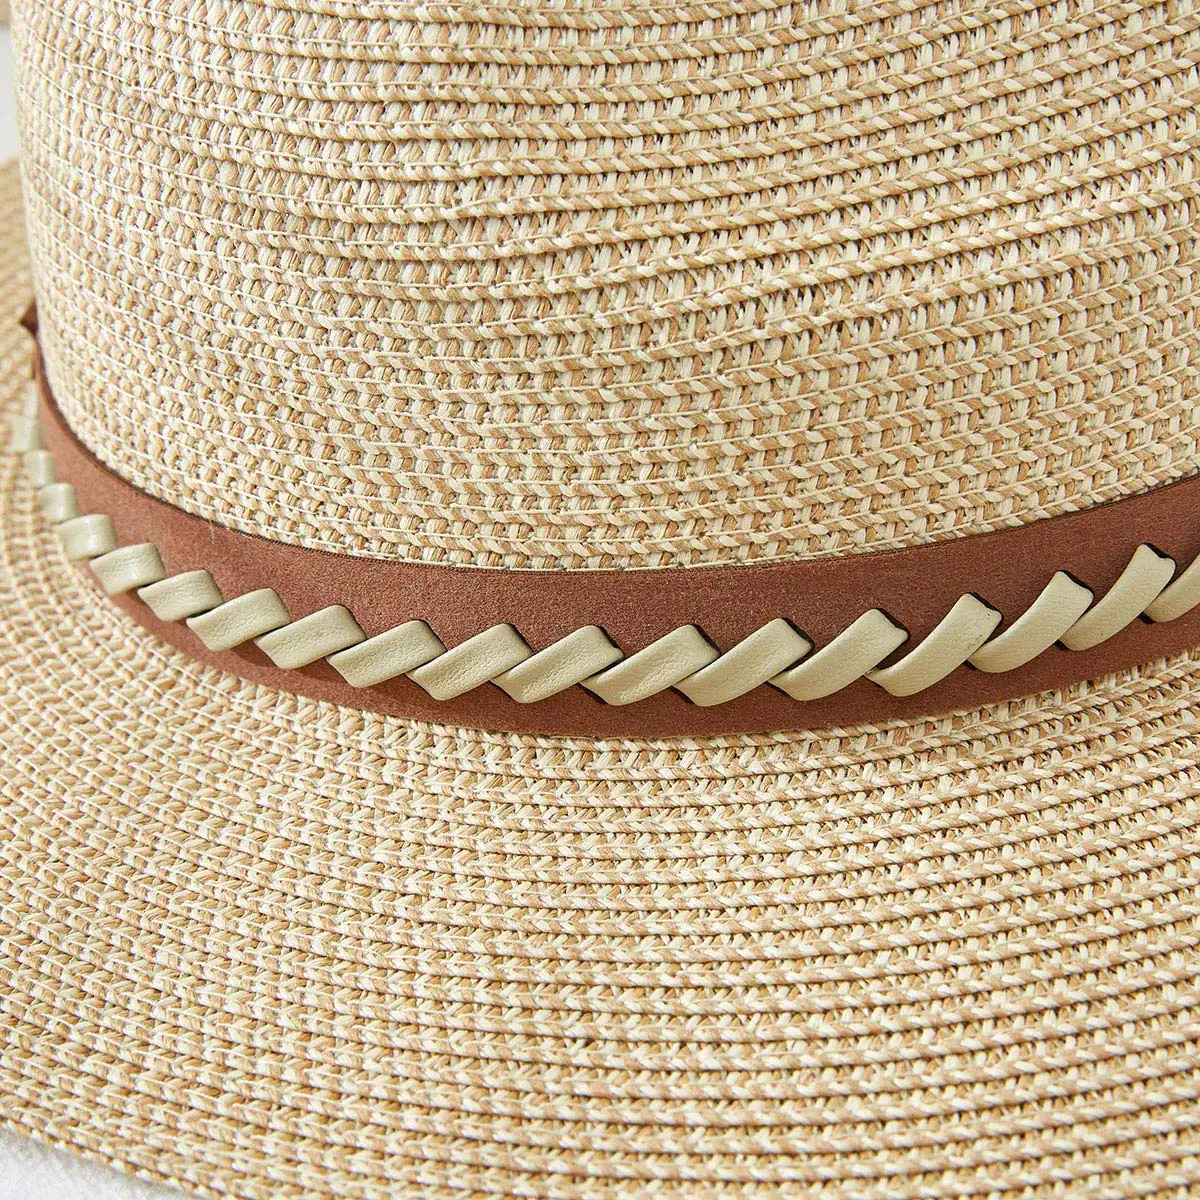 Khaki Woven Hat/Braided Band